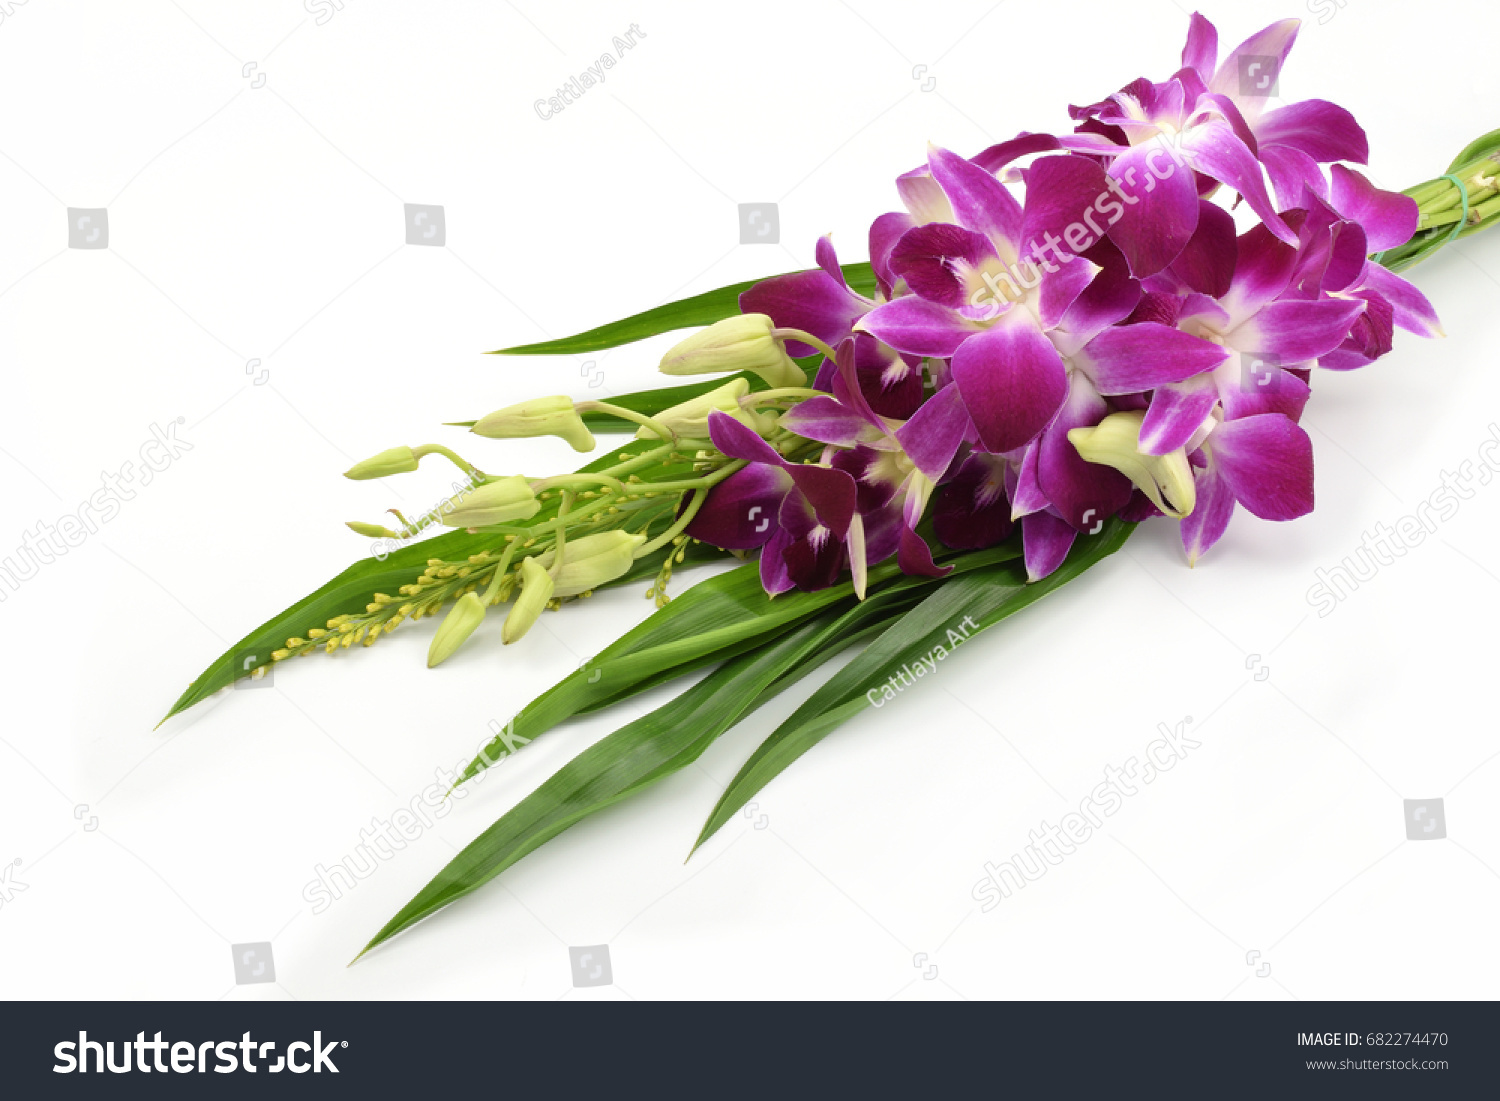 Purple White Orchid Bouquet Dendrobium On Stock Photo Edit Now 682274470